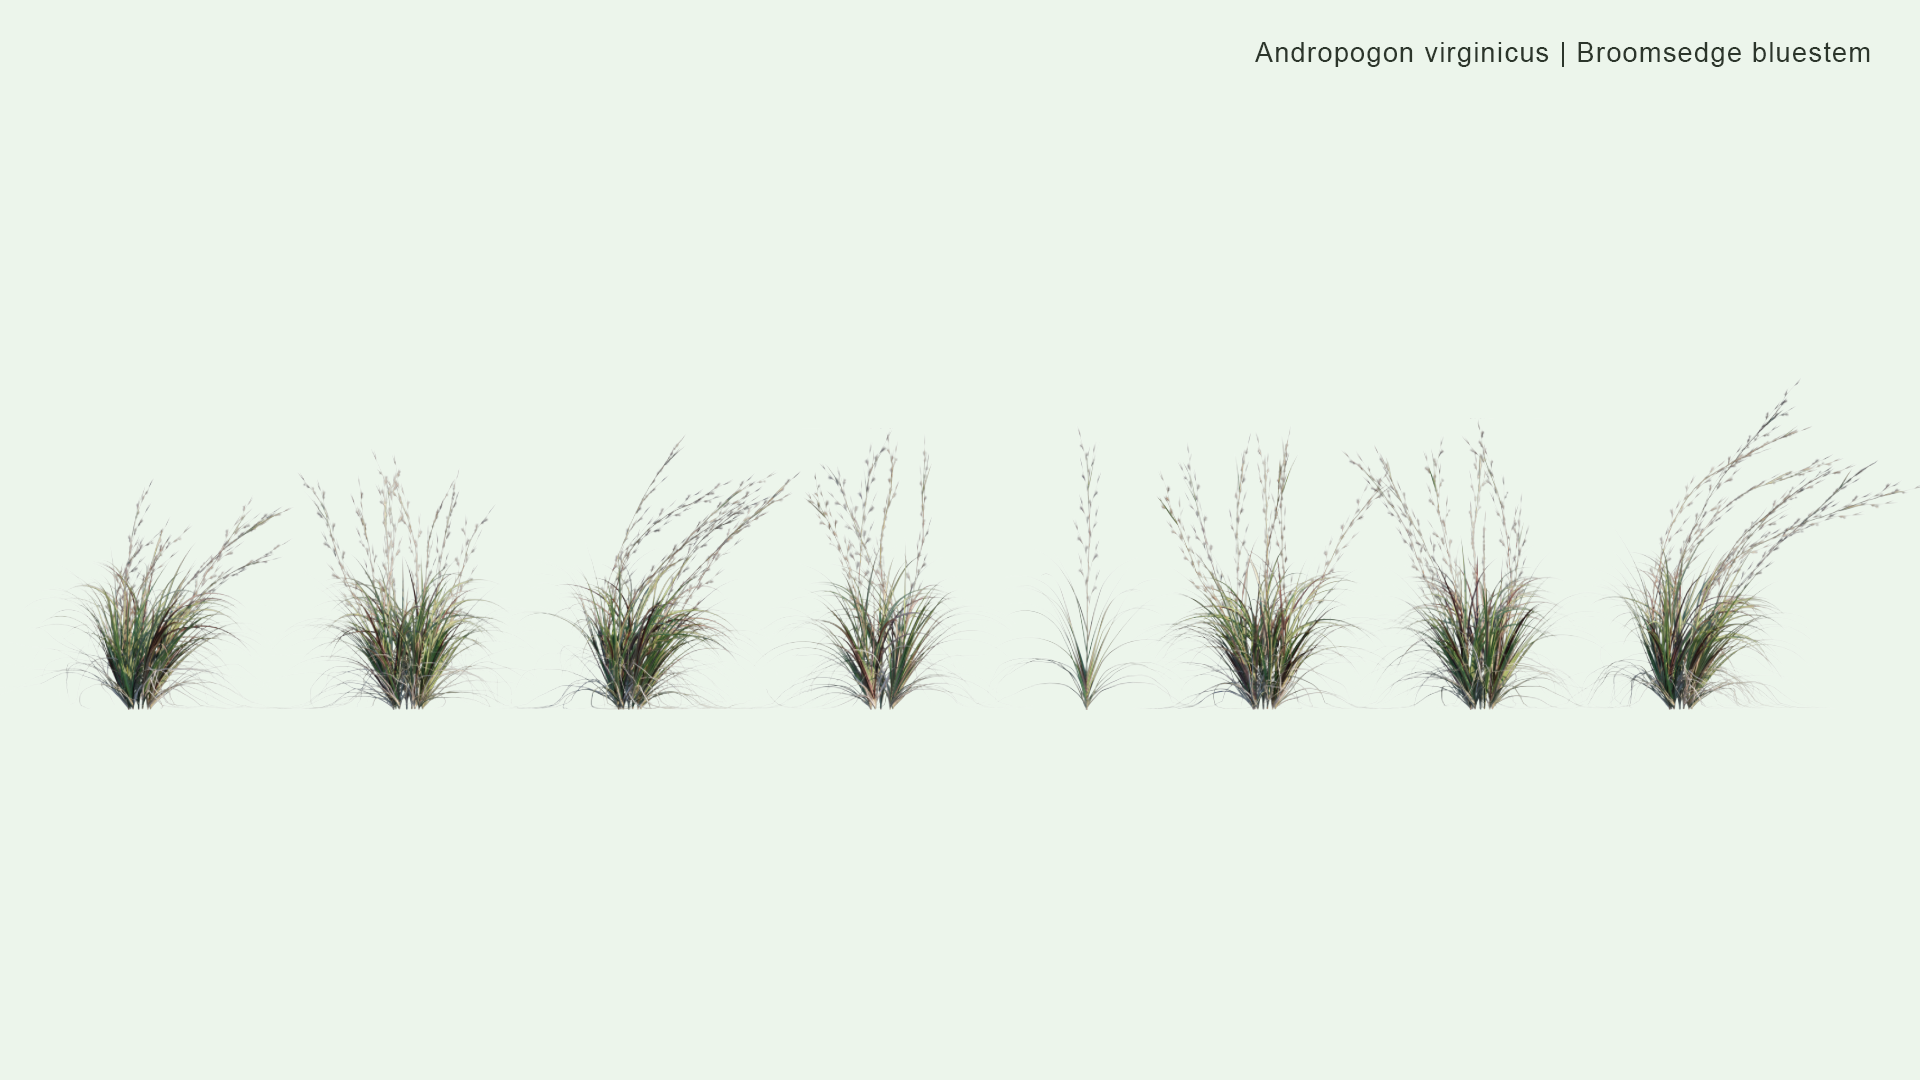 2D Andropogon Virginicus - Broomsedge Bluestem, Yellowsedge Bluestem, Whiskey Grass